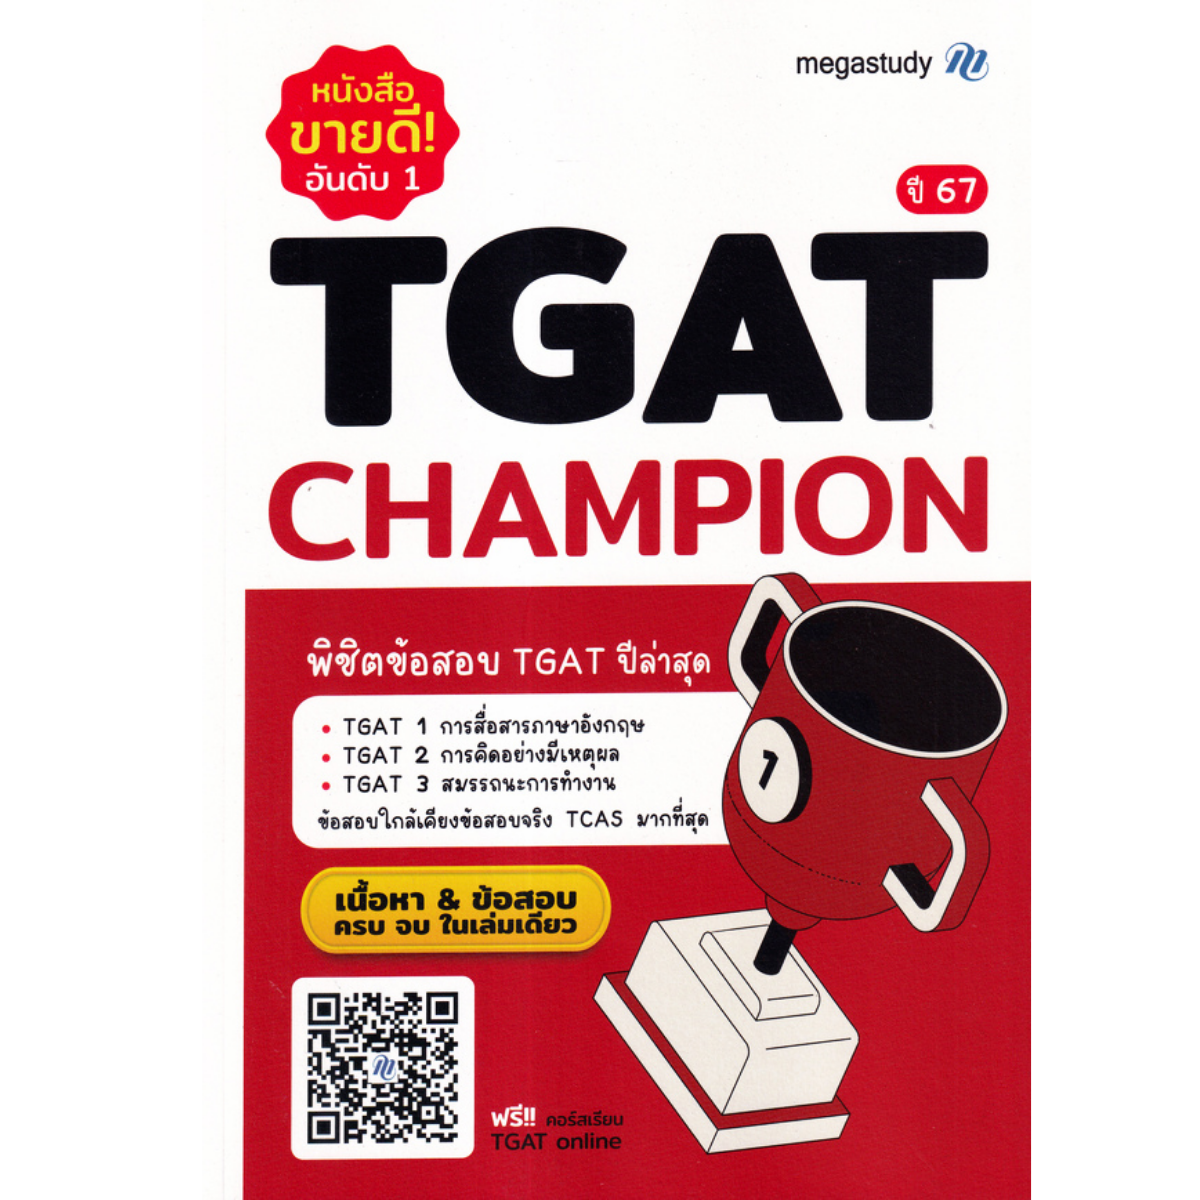 TGAT CHAMPION (New Version)